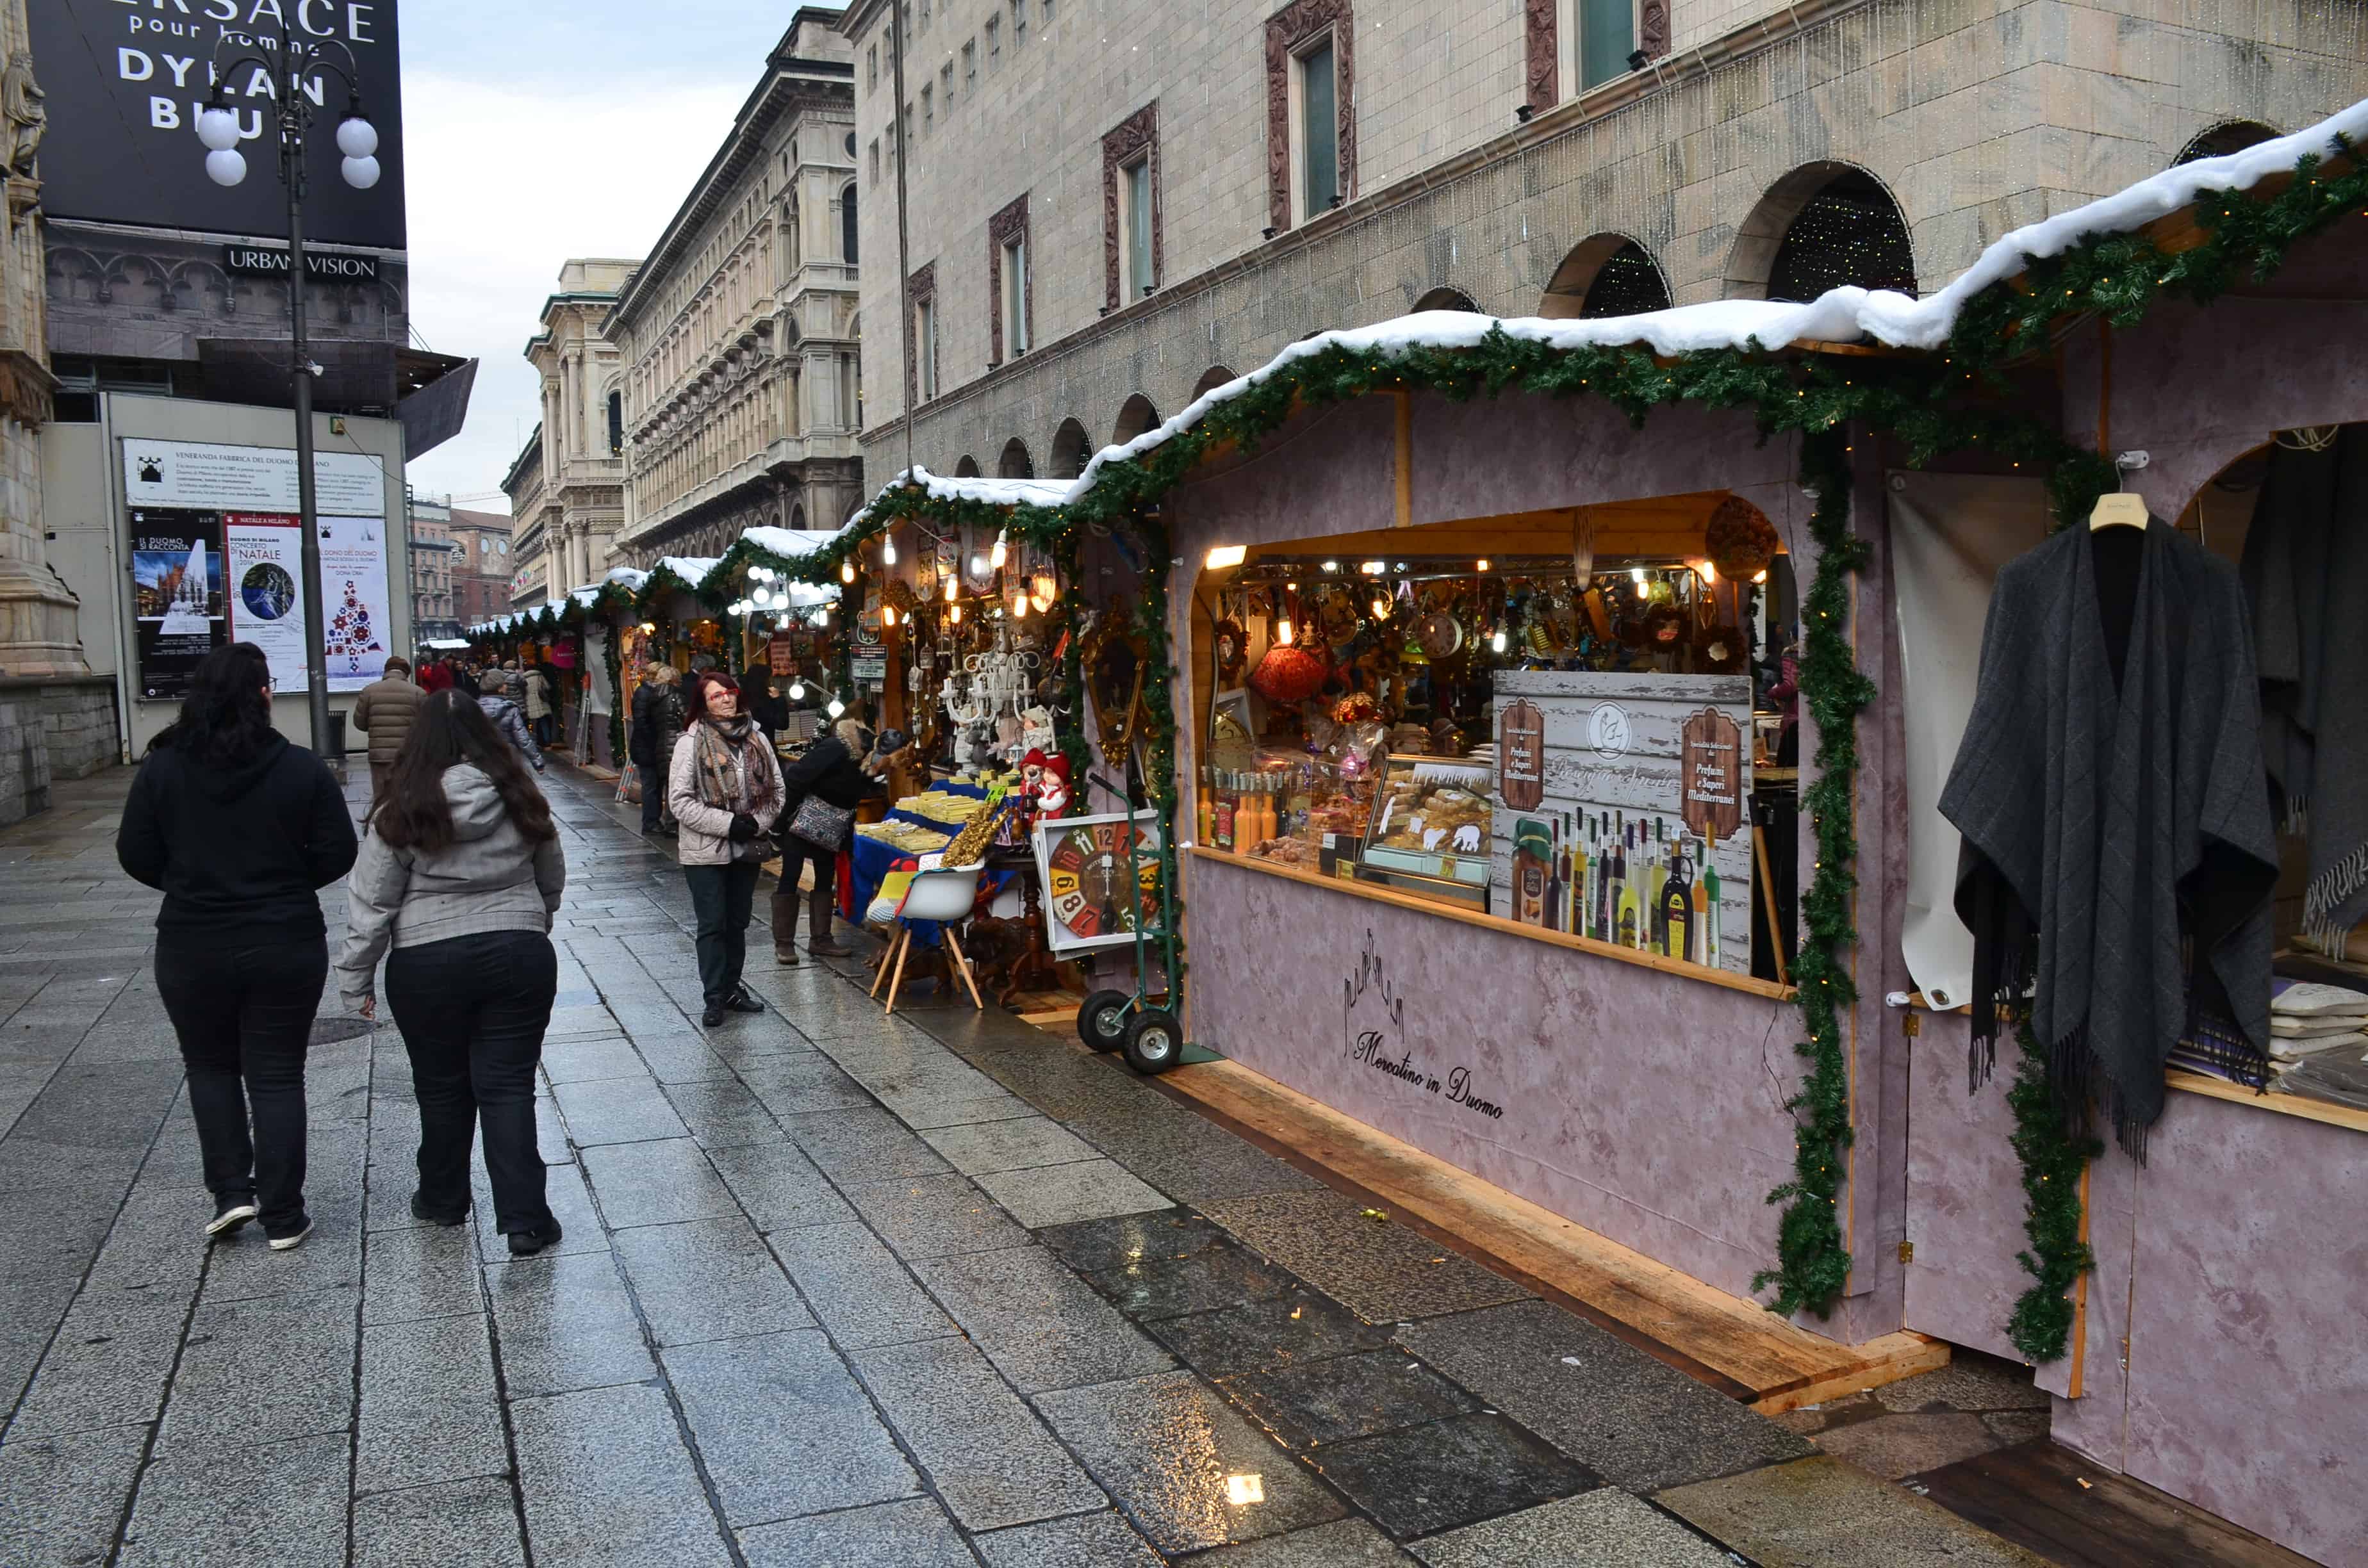 Christmas market at the Duomo in Milan, Italy